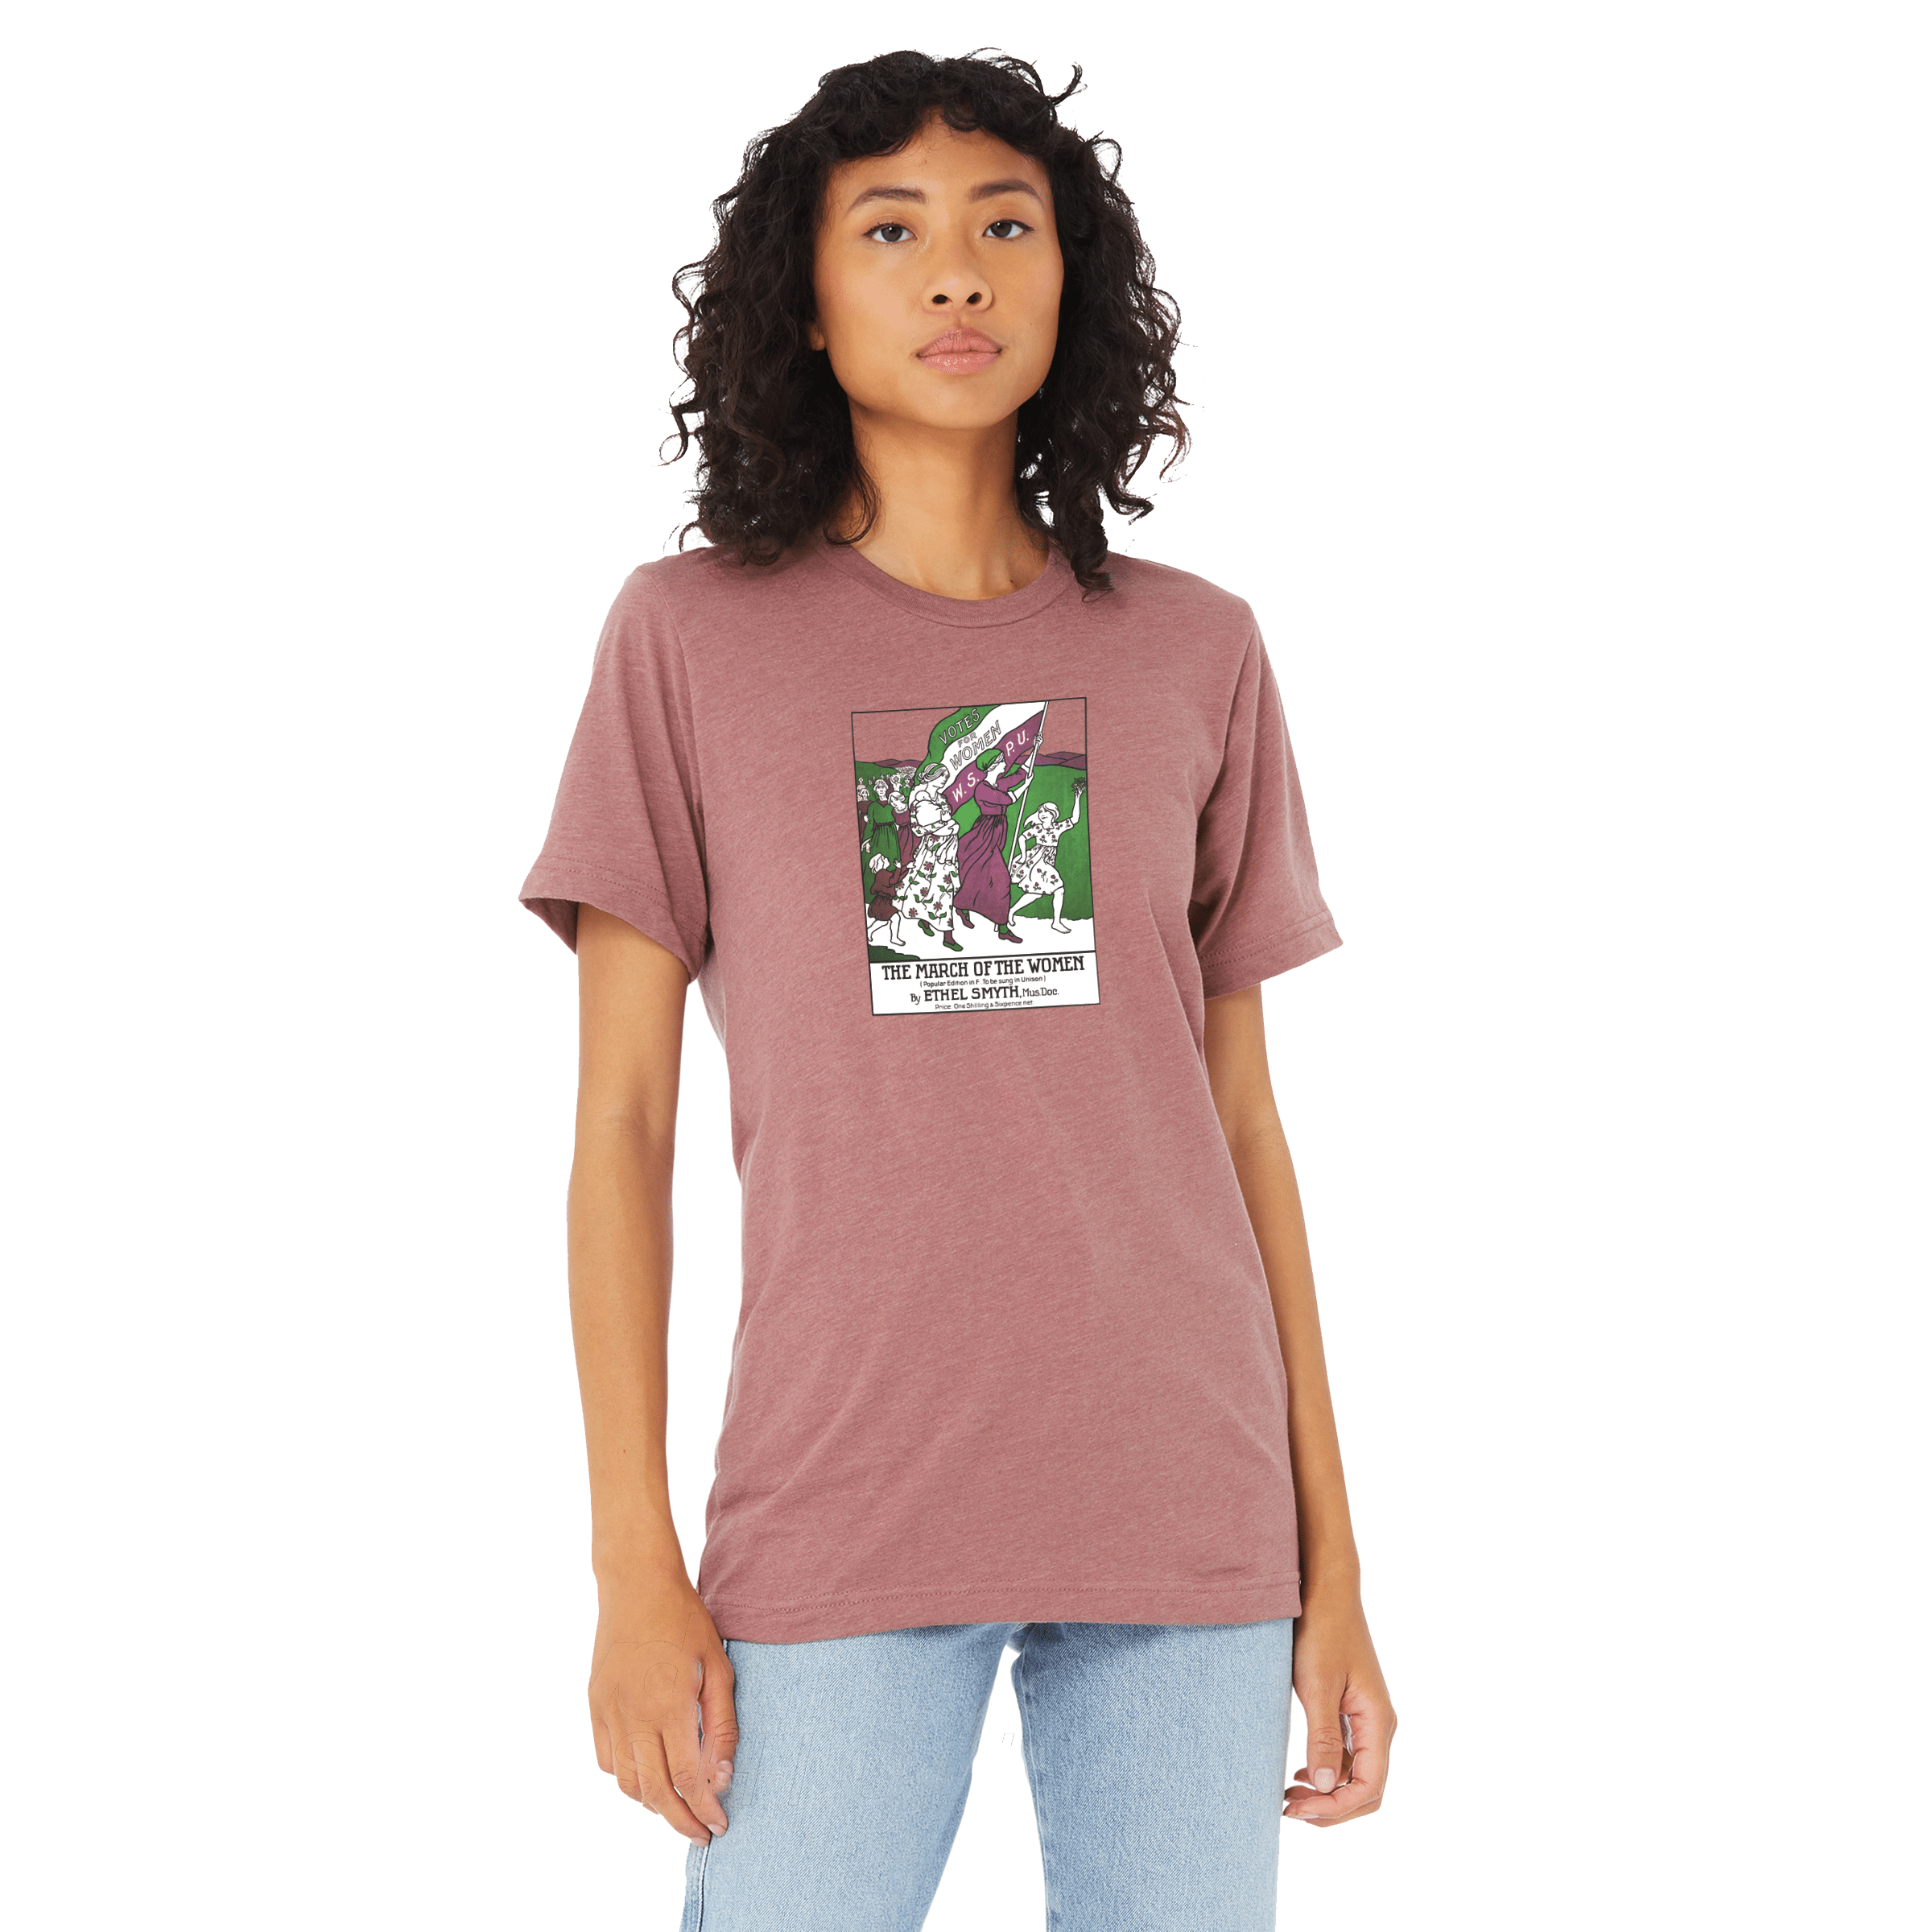 Ethel Smyth: March of the Women T-Shirt